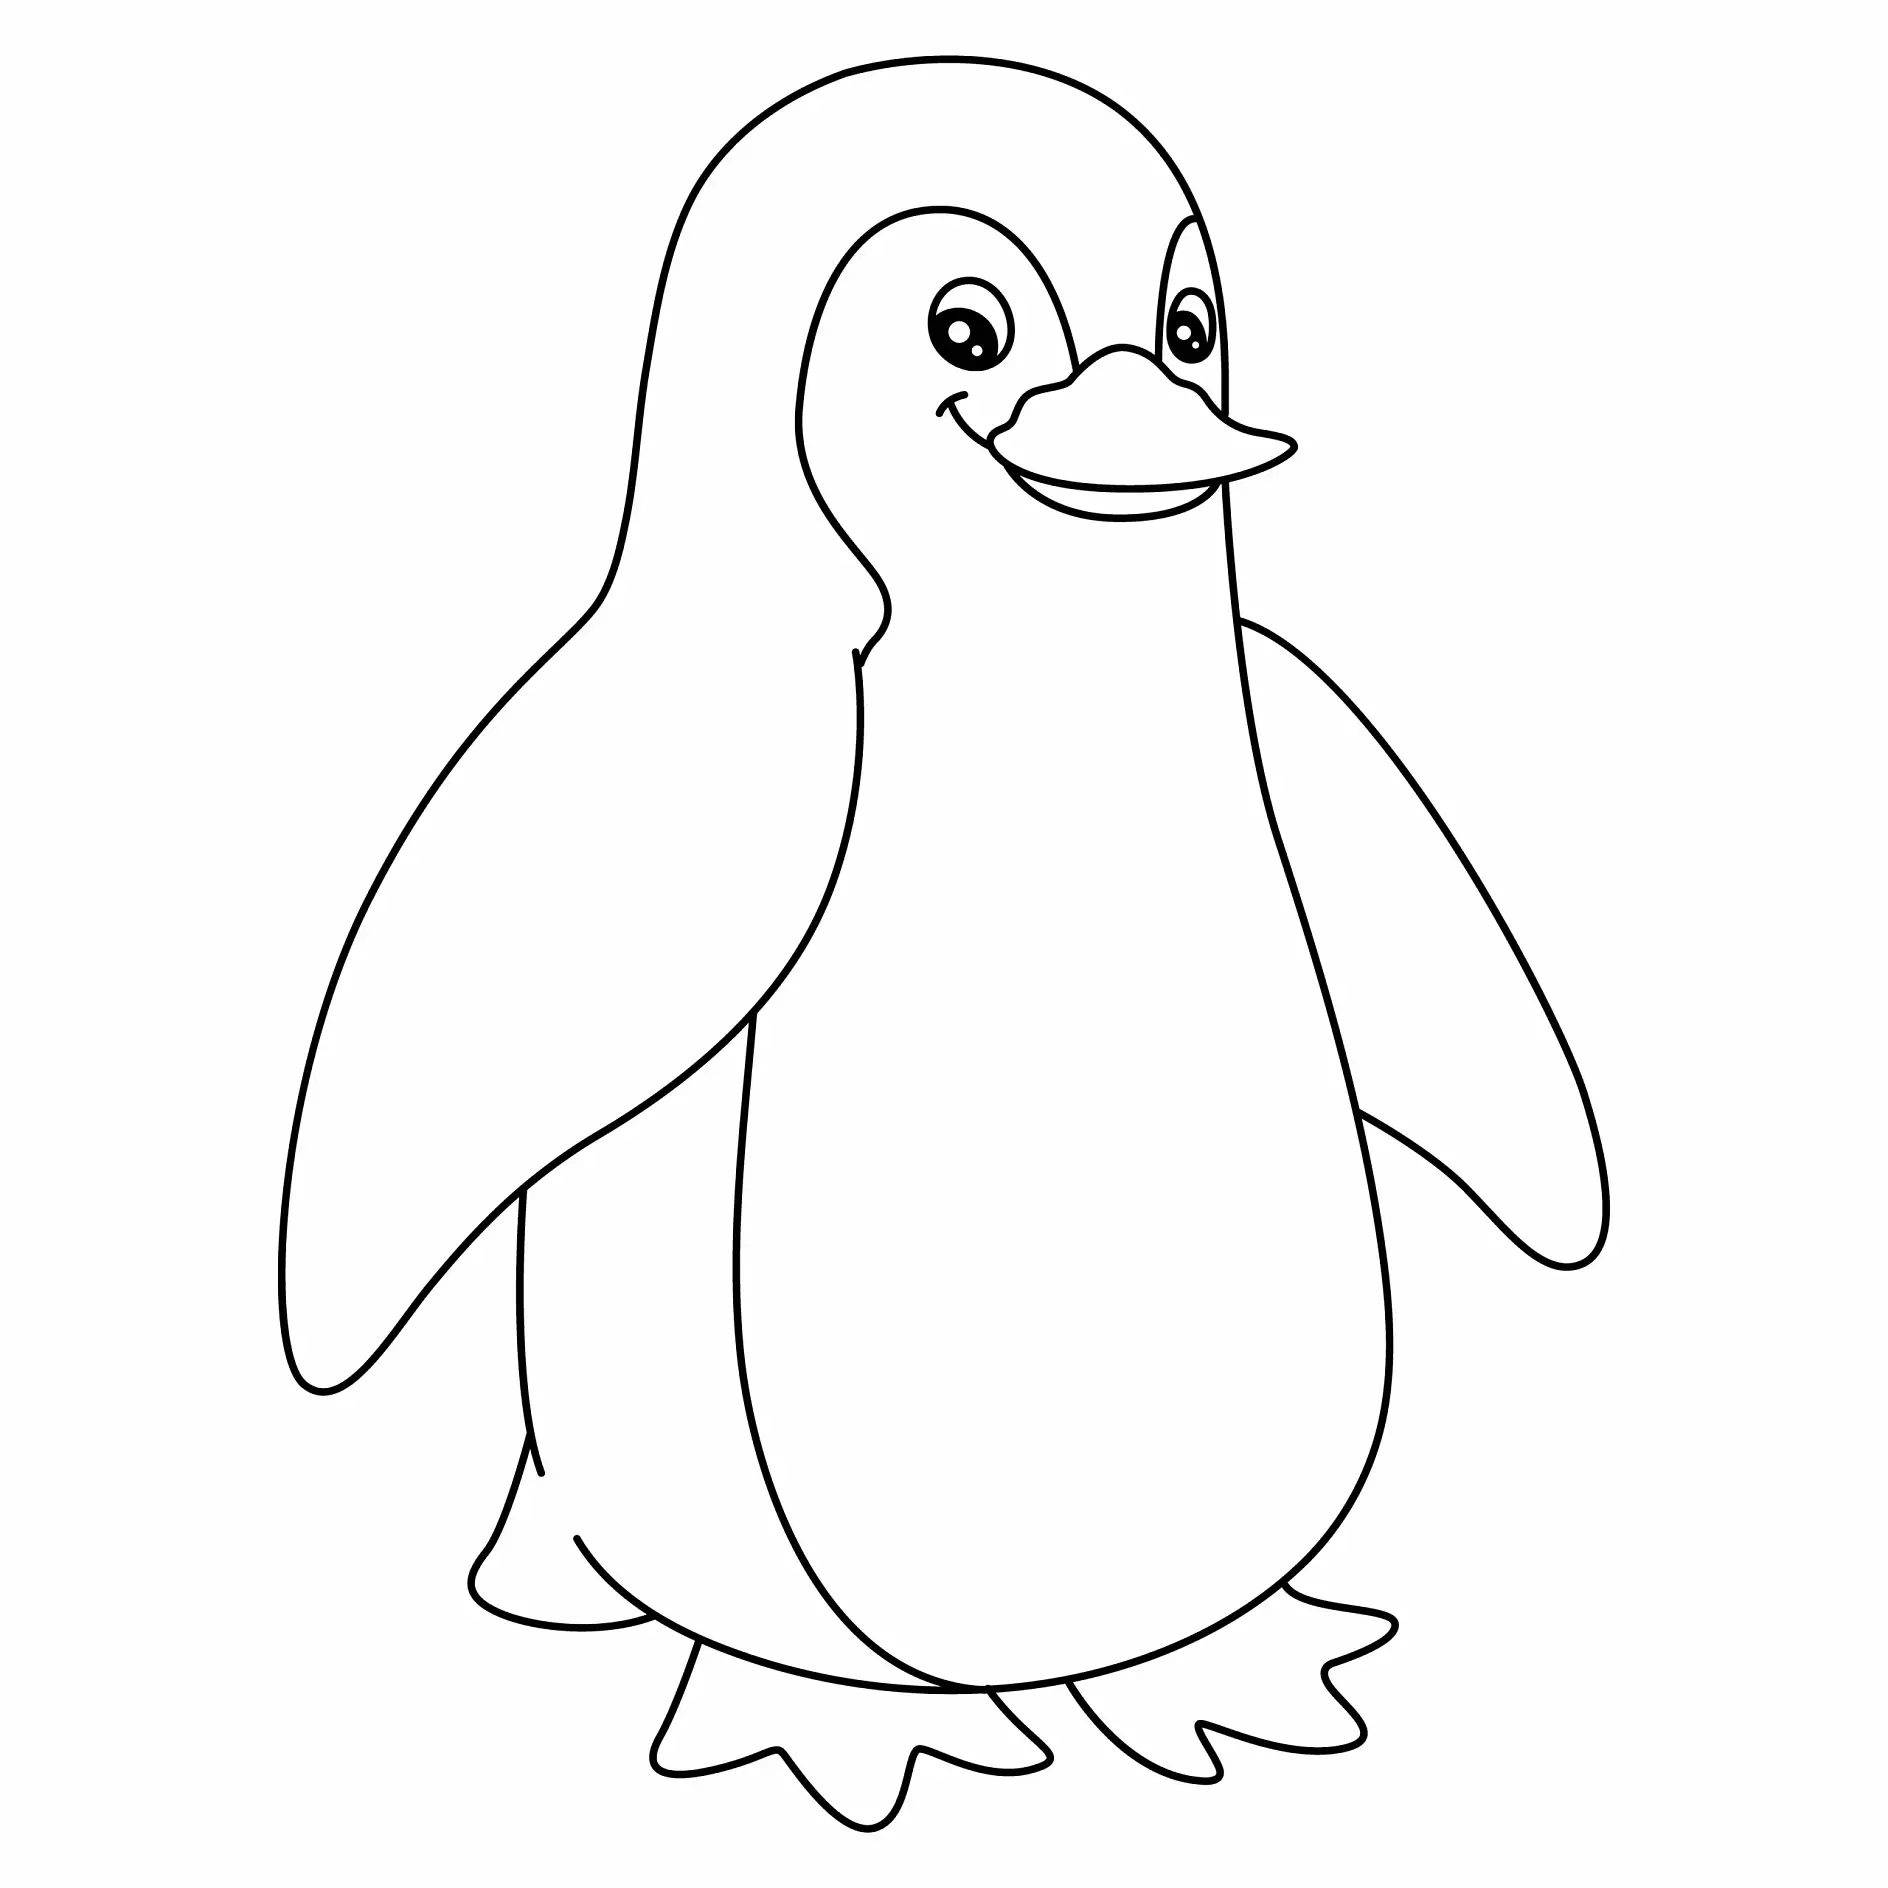 Ausmalbild Pinguin lächelnd